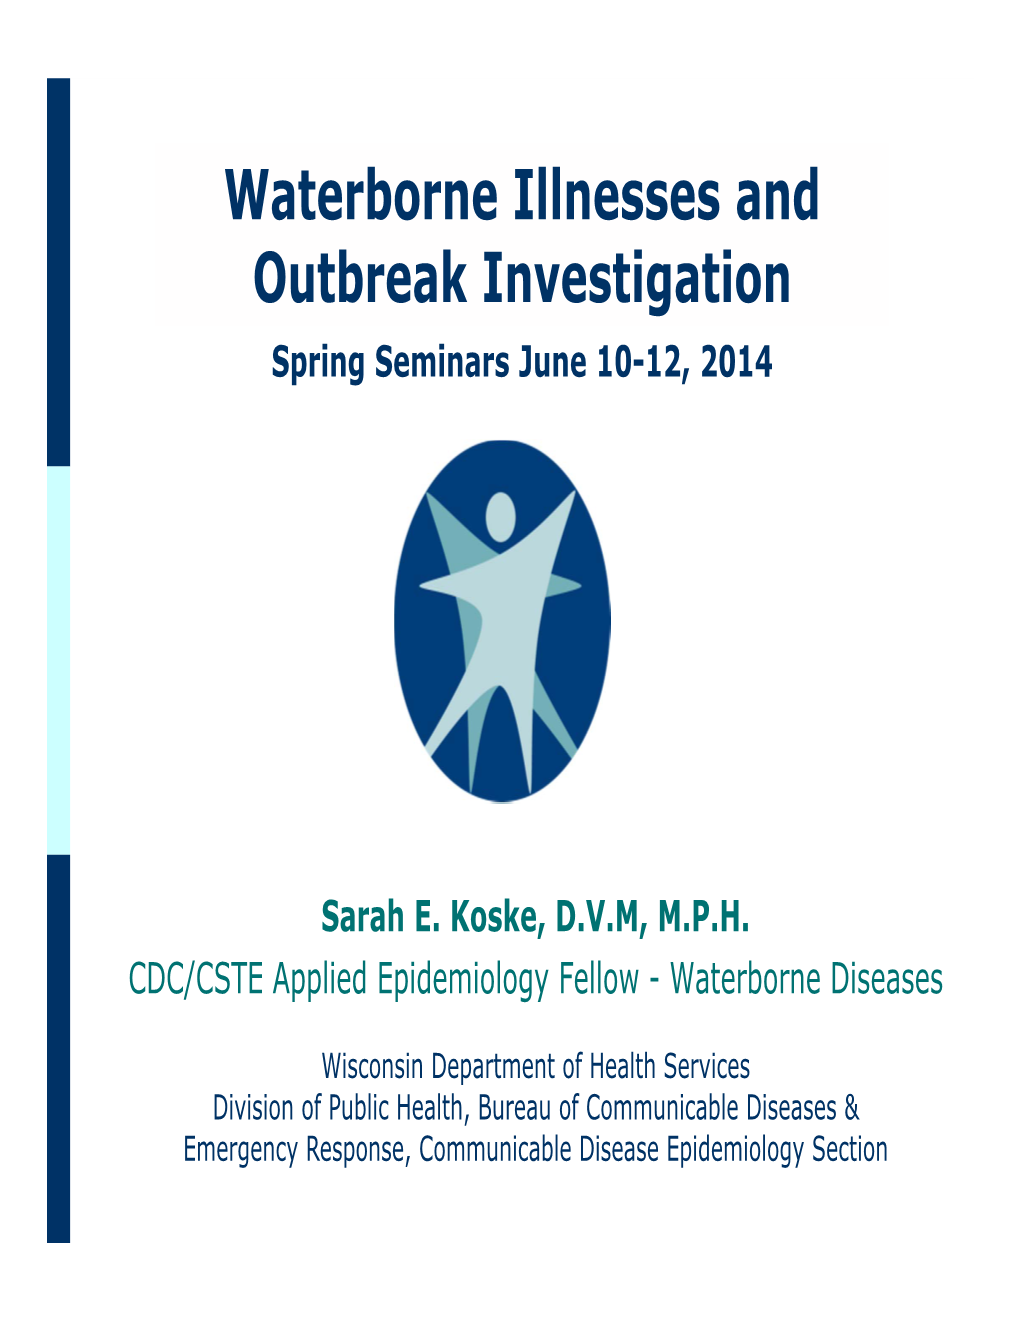 Presentation Title Waterborne Illnesses and Outbreak Investigation